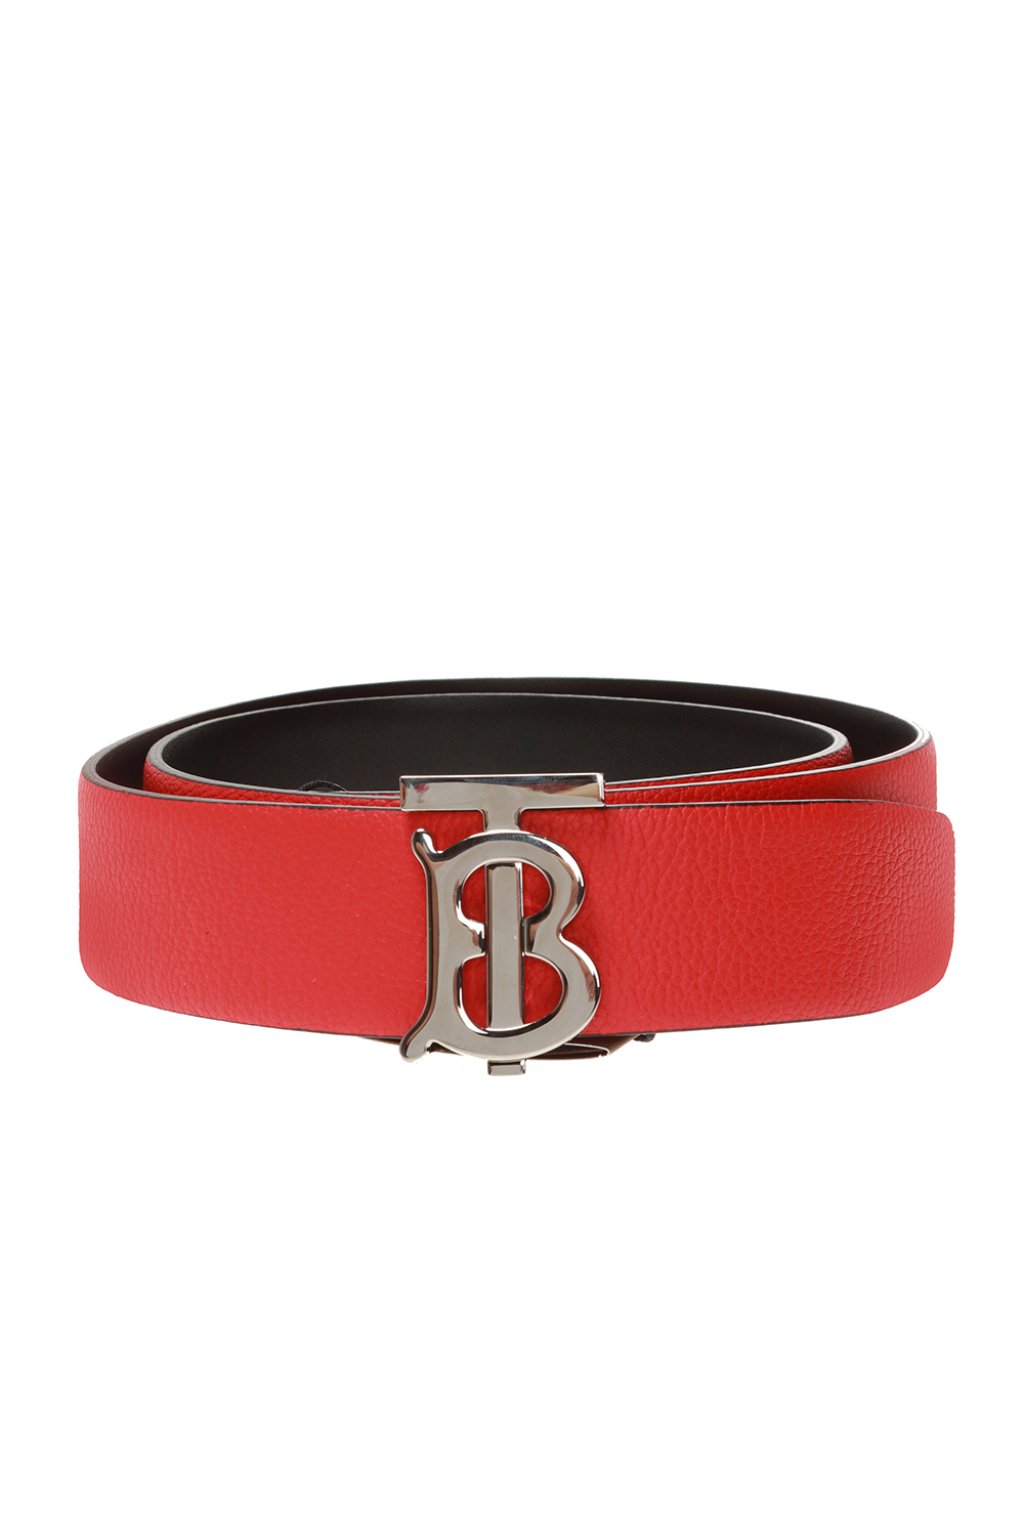 Burberry Leather belt | Women's Accessories | Vitkac